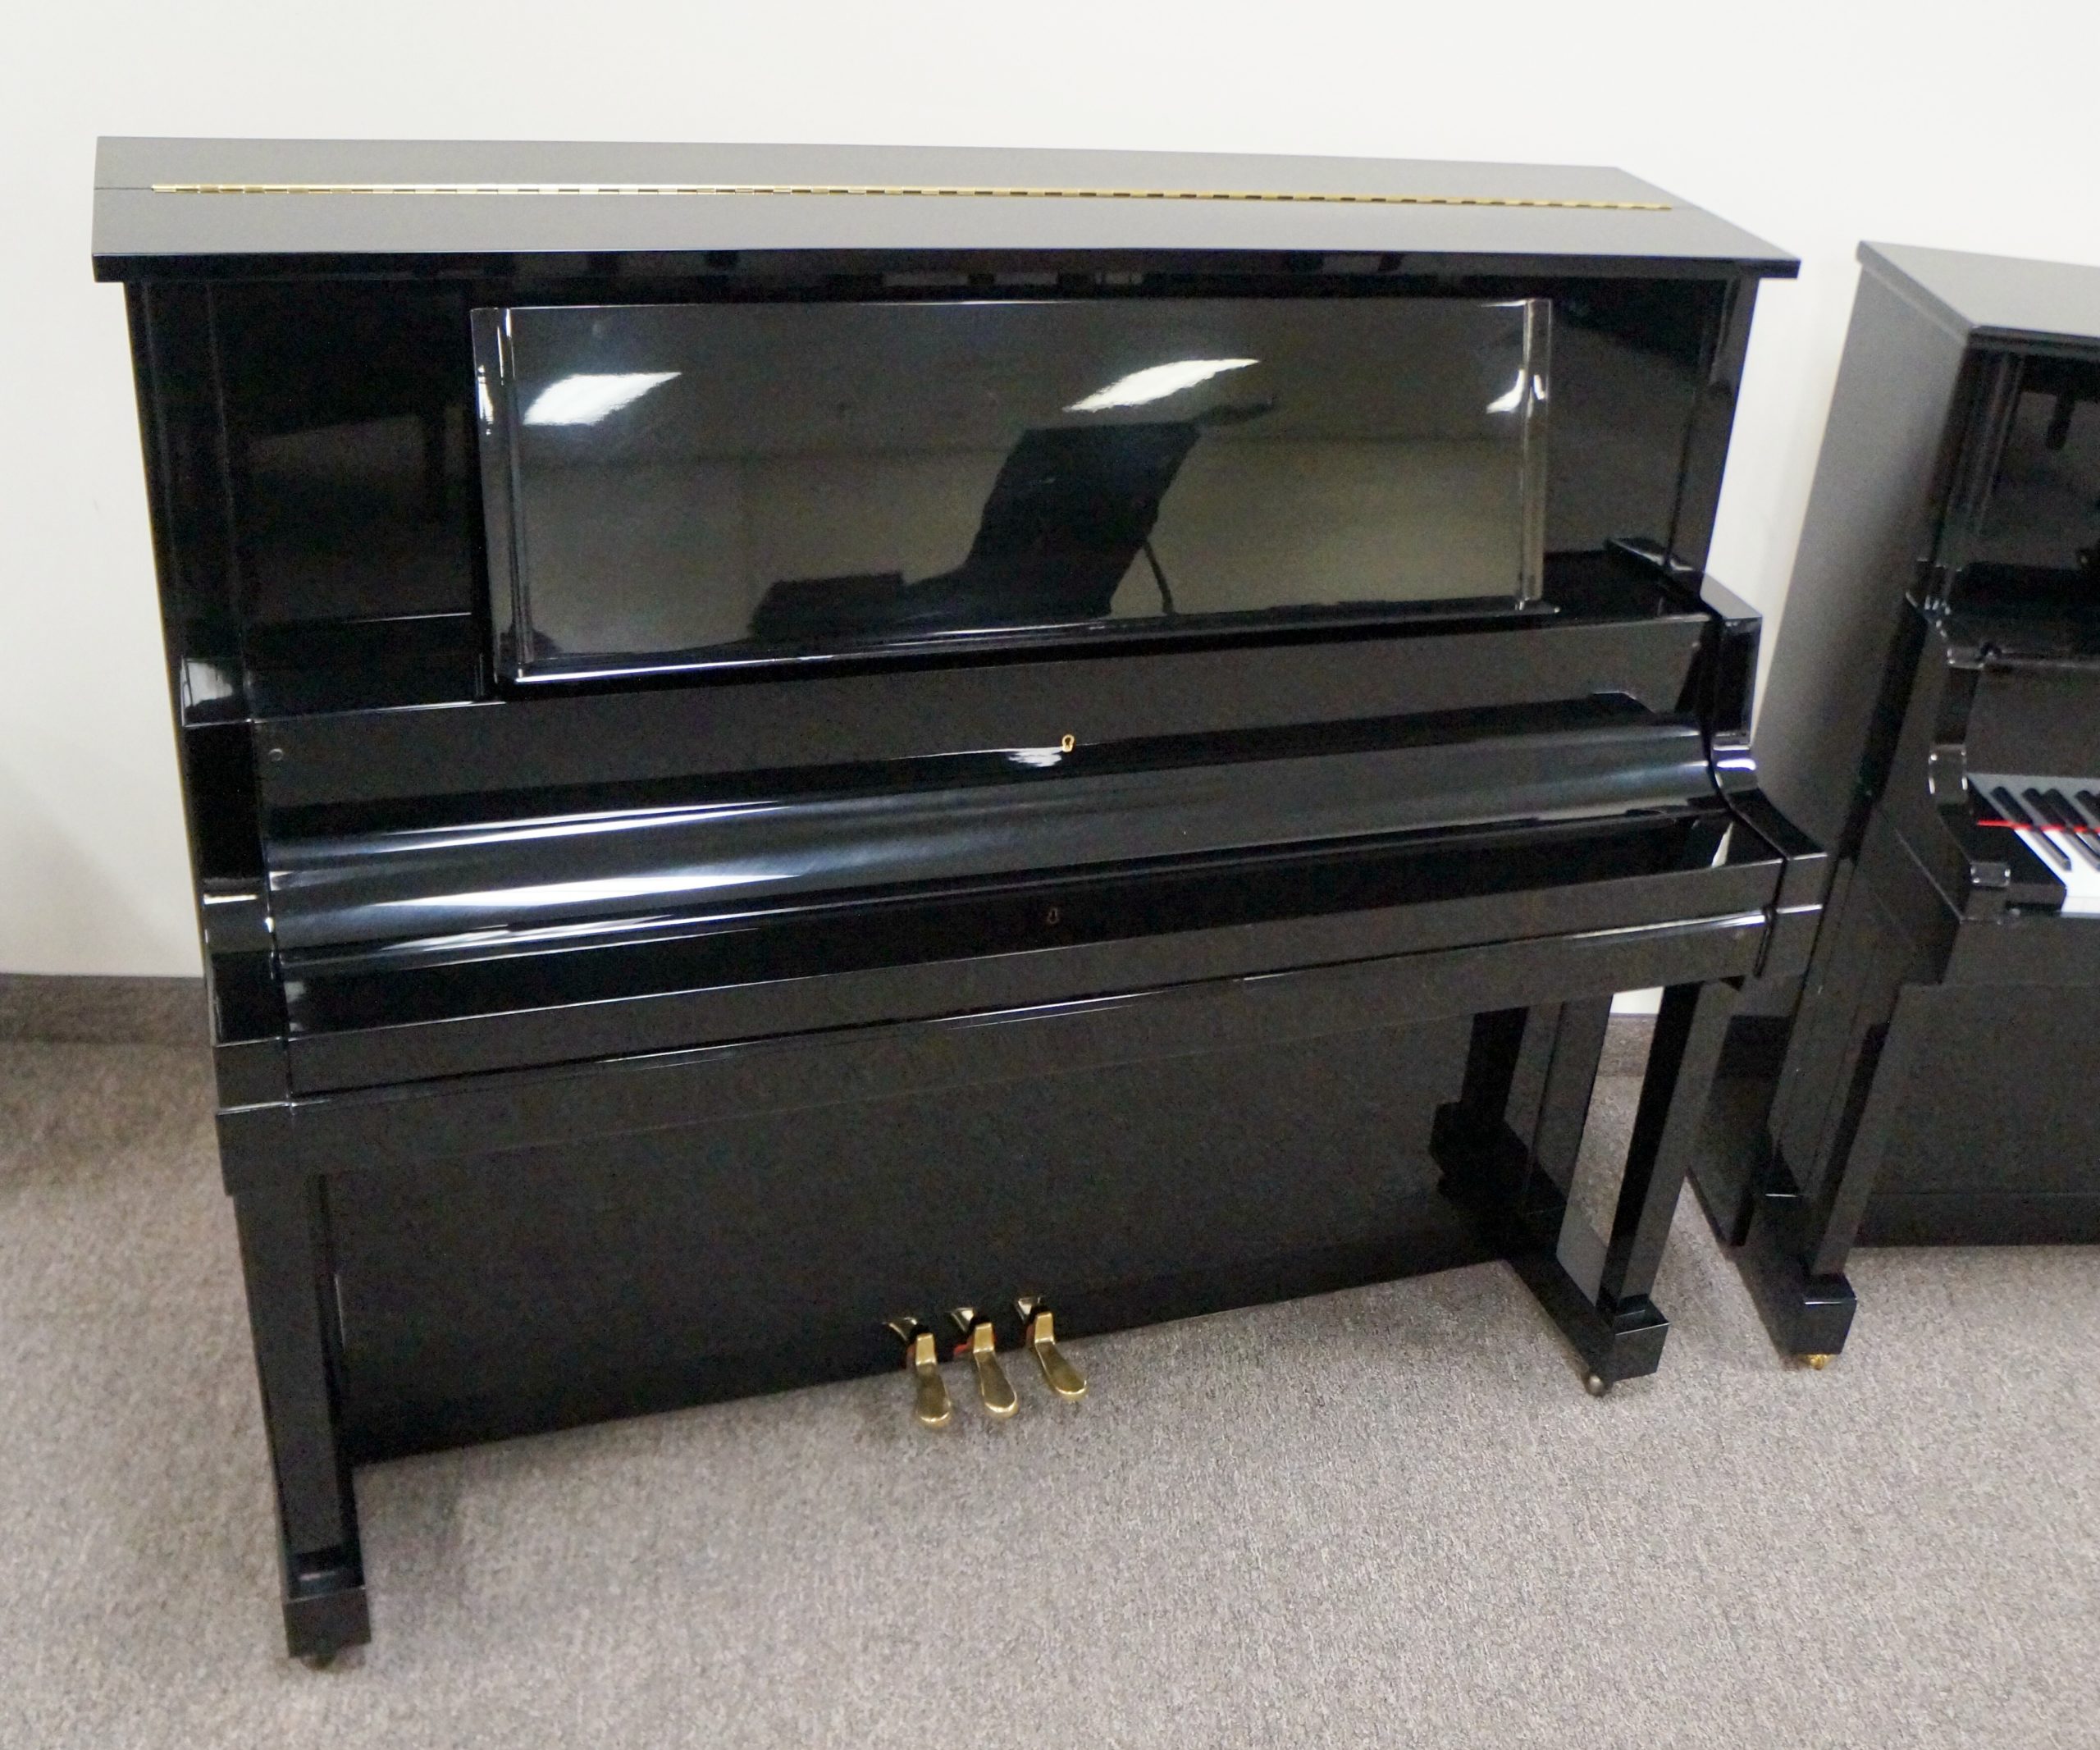 Kawai Us75 Upright Piano